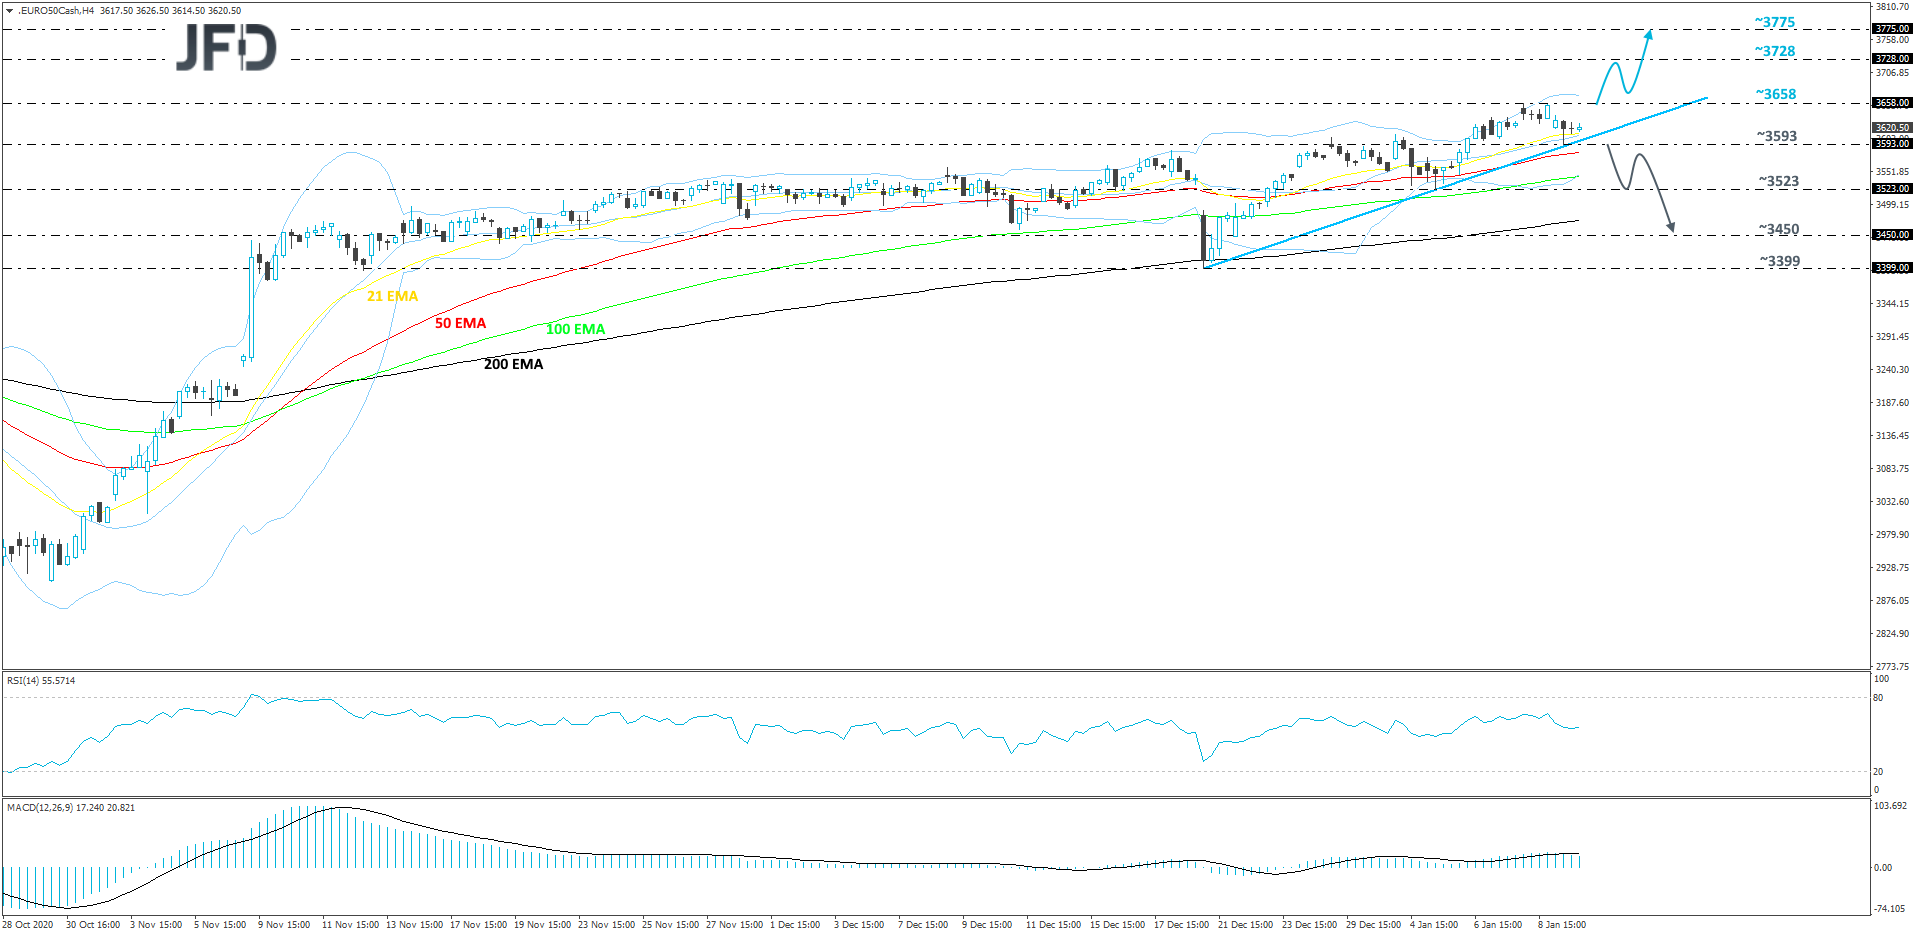 Euro Stoxx 50 4-hour chart technical analysis